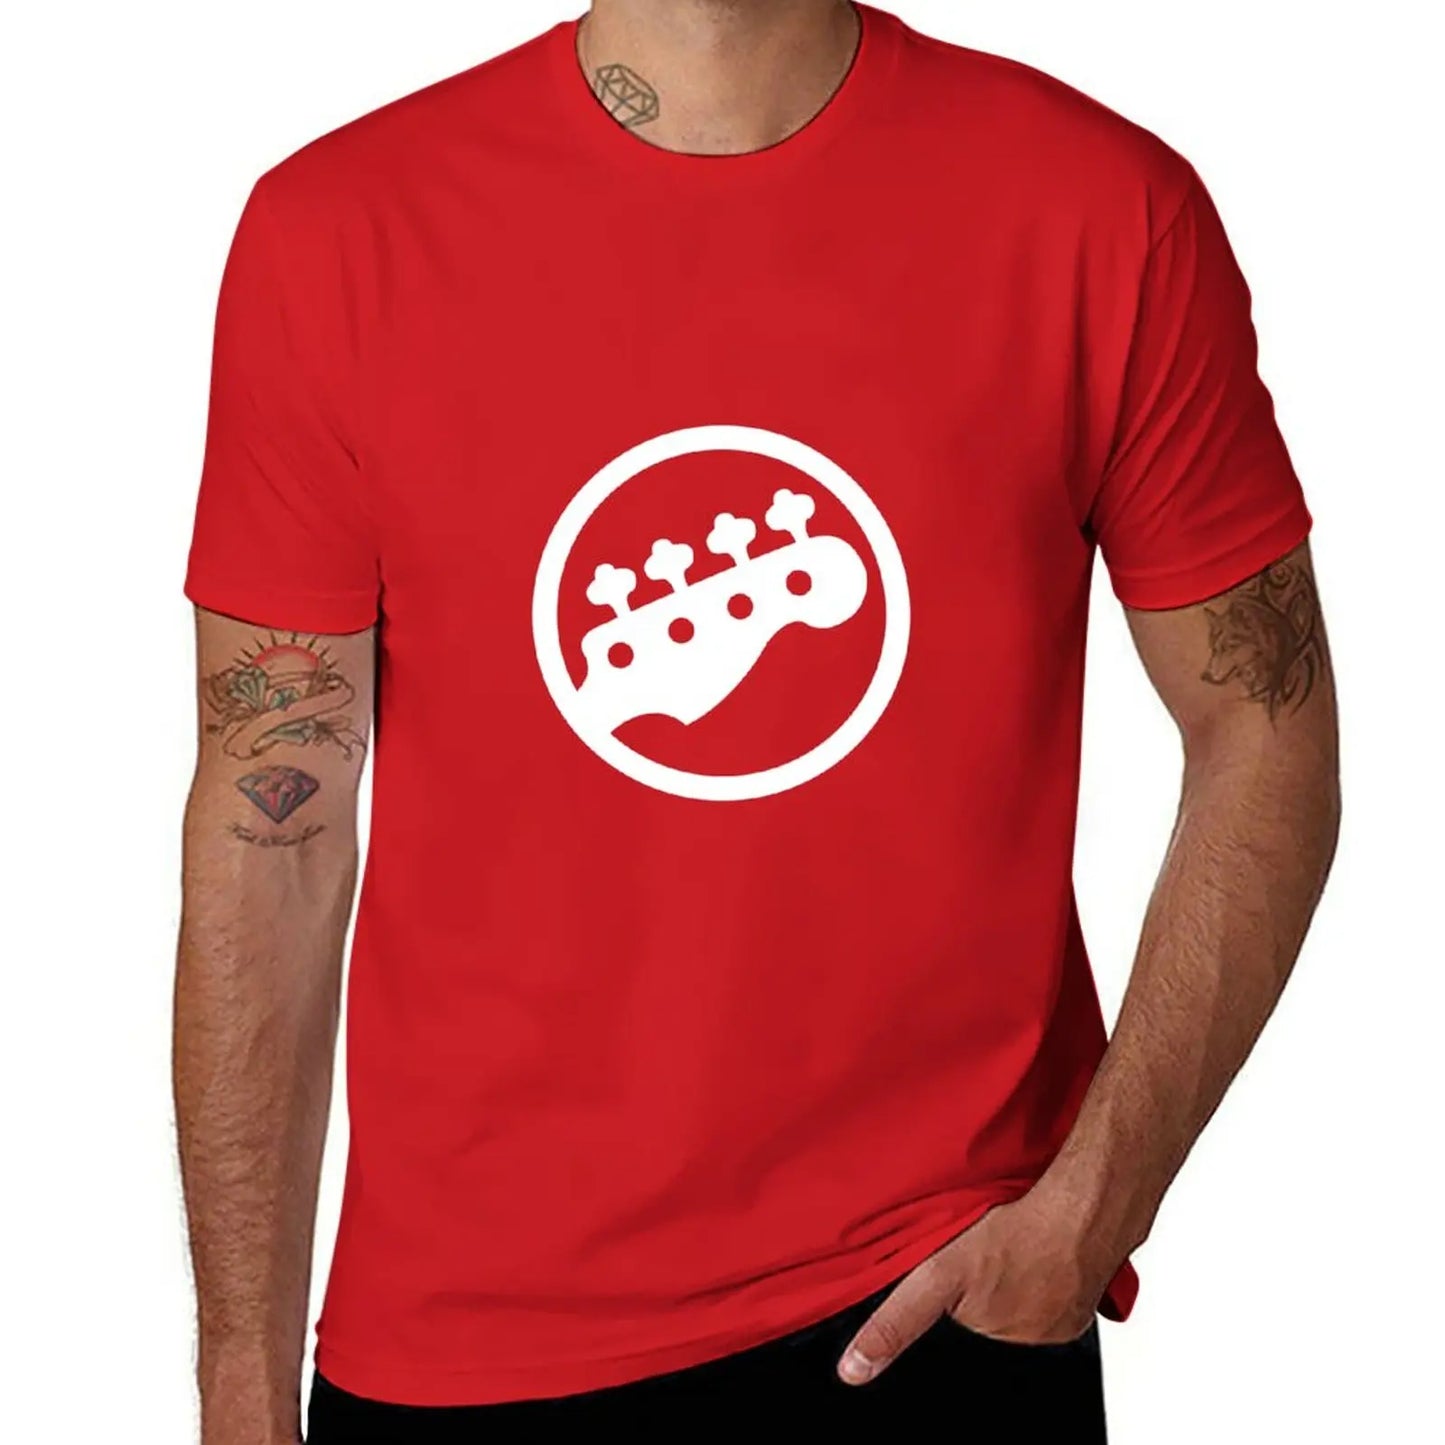 Bass Guitar T-Shirt Bassist Clothing Summer Tops animal print shirt for boys funny t shirts for men - Lizard Vigilante